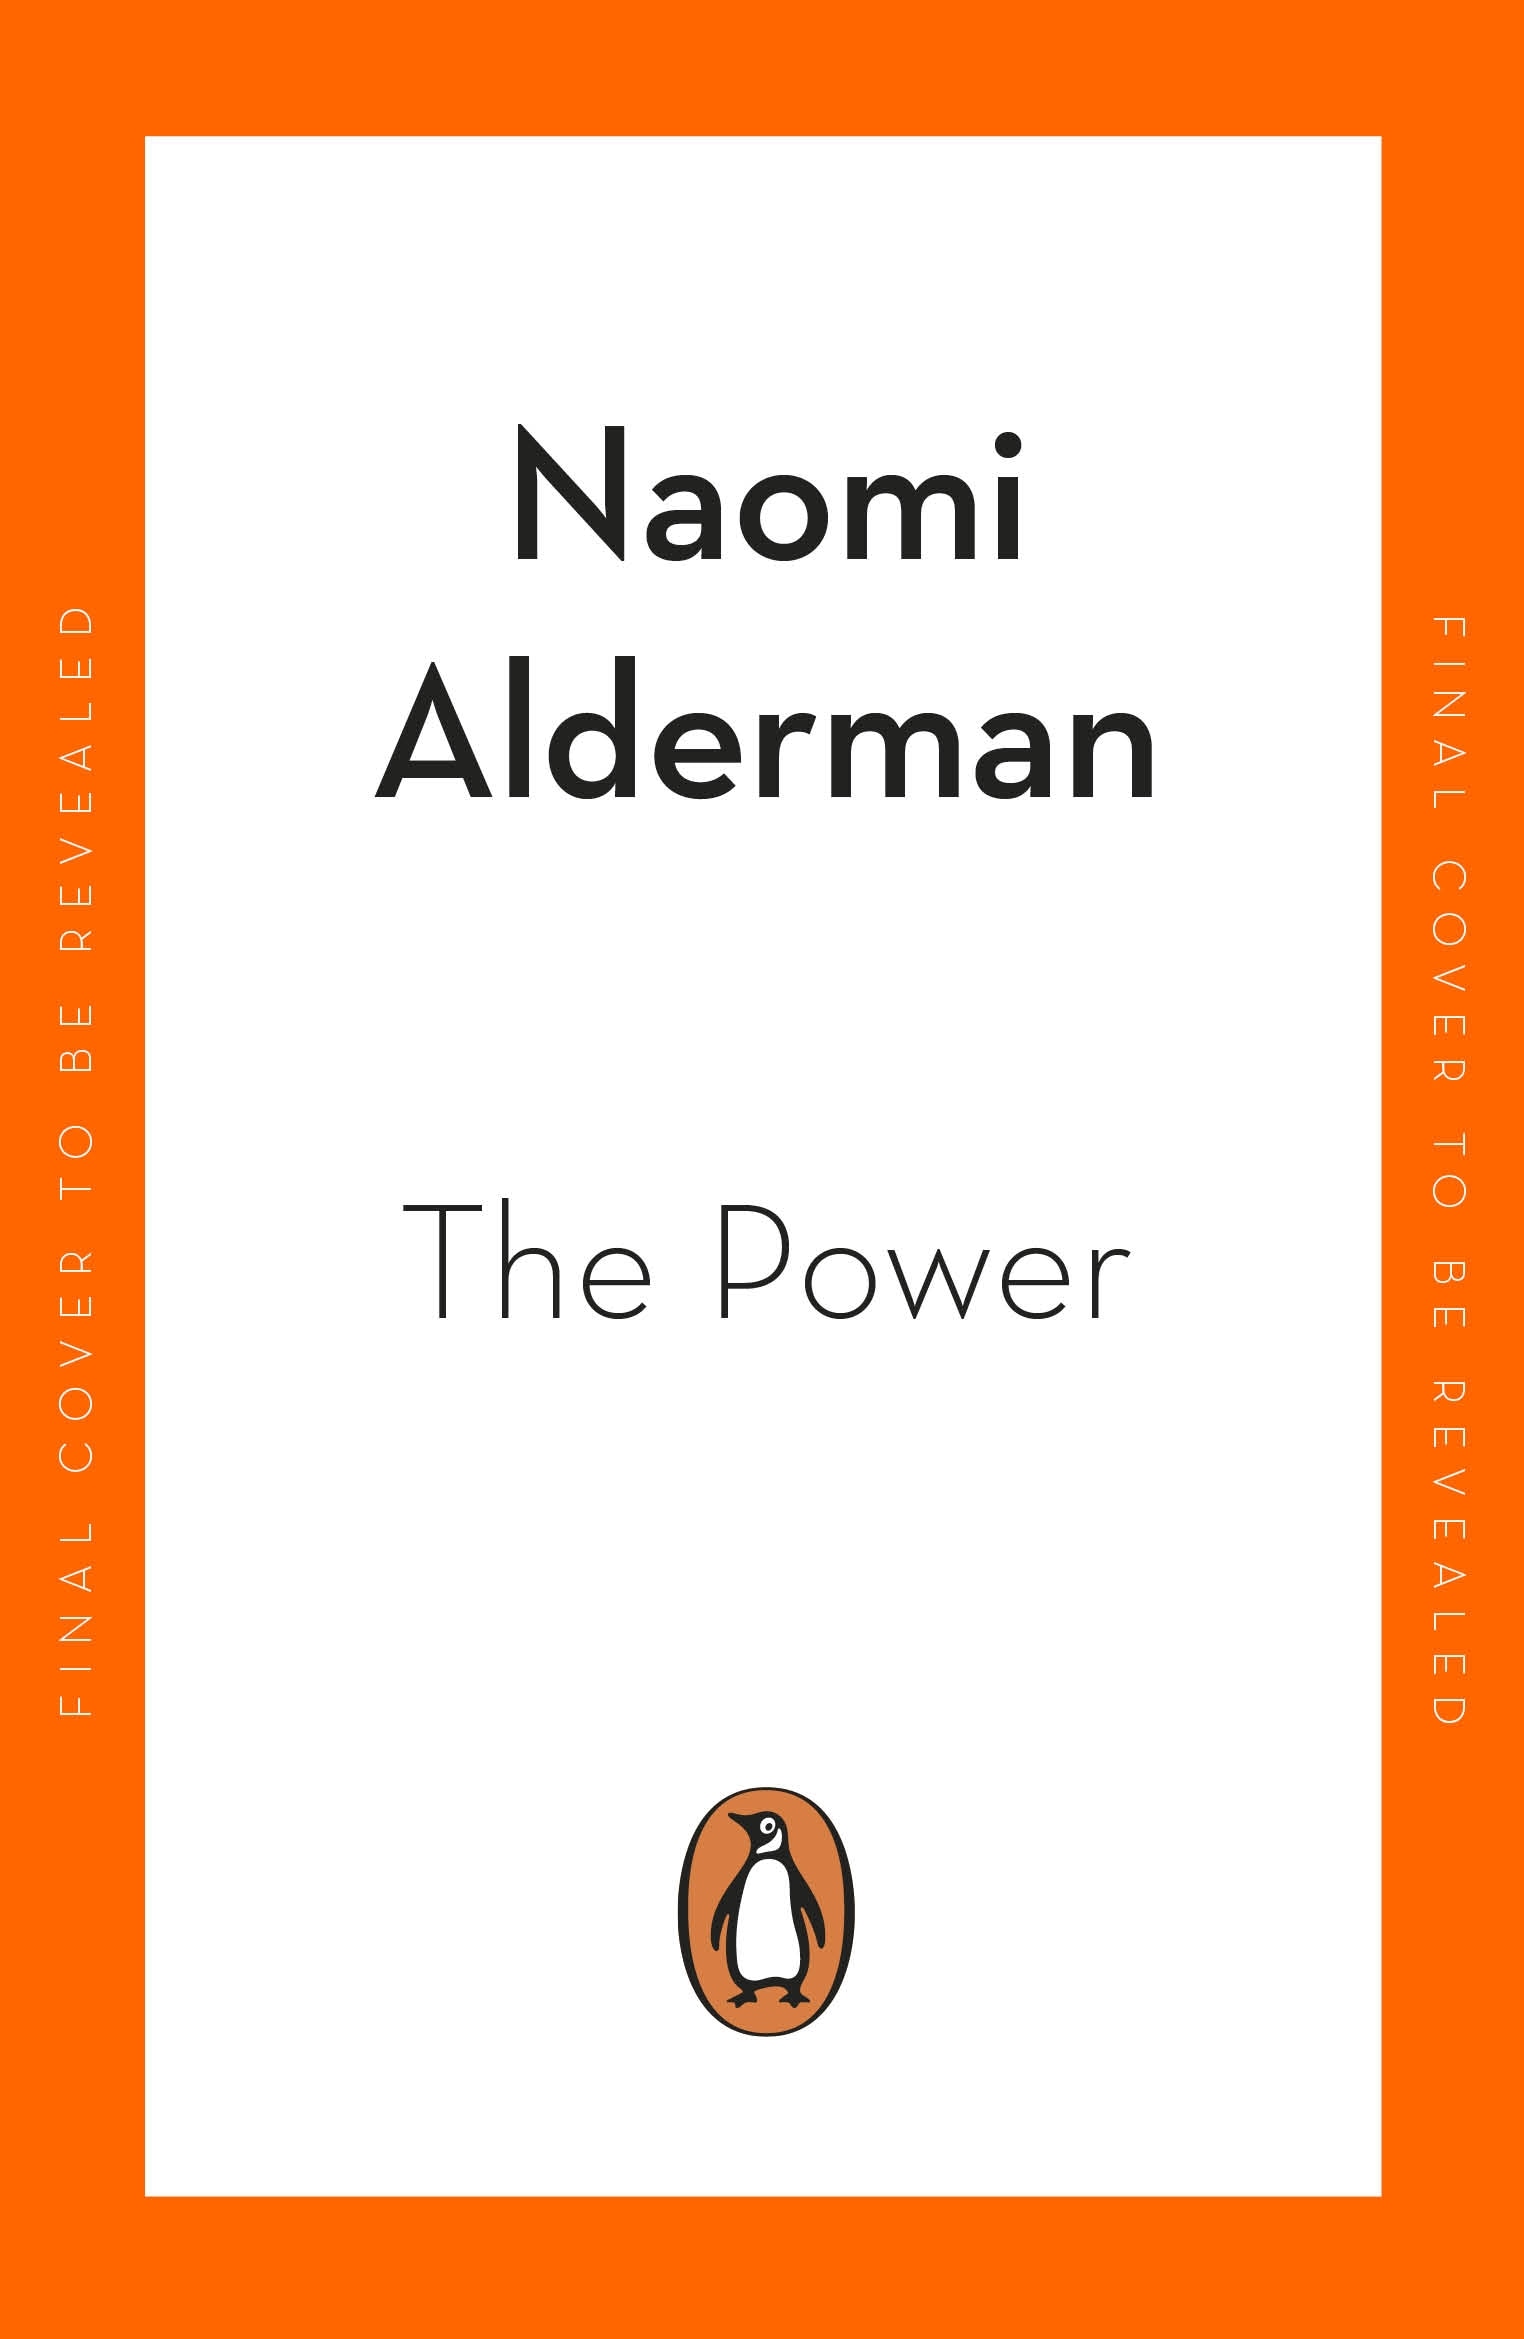 Book “The Power” by Naomi Alderman — November 3, 2022